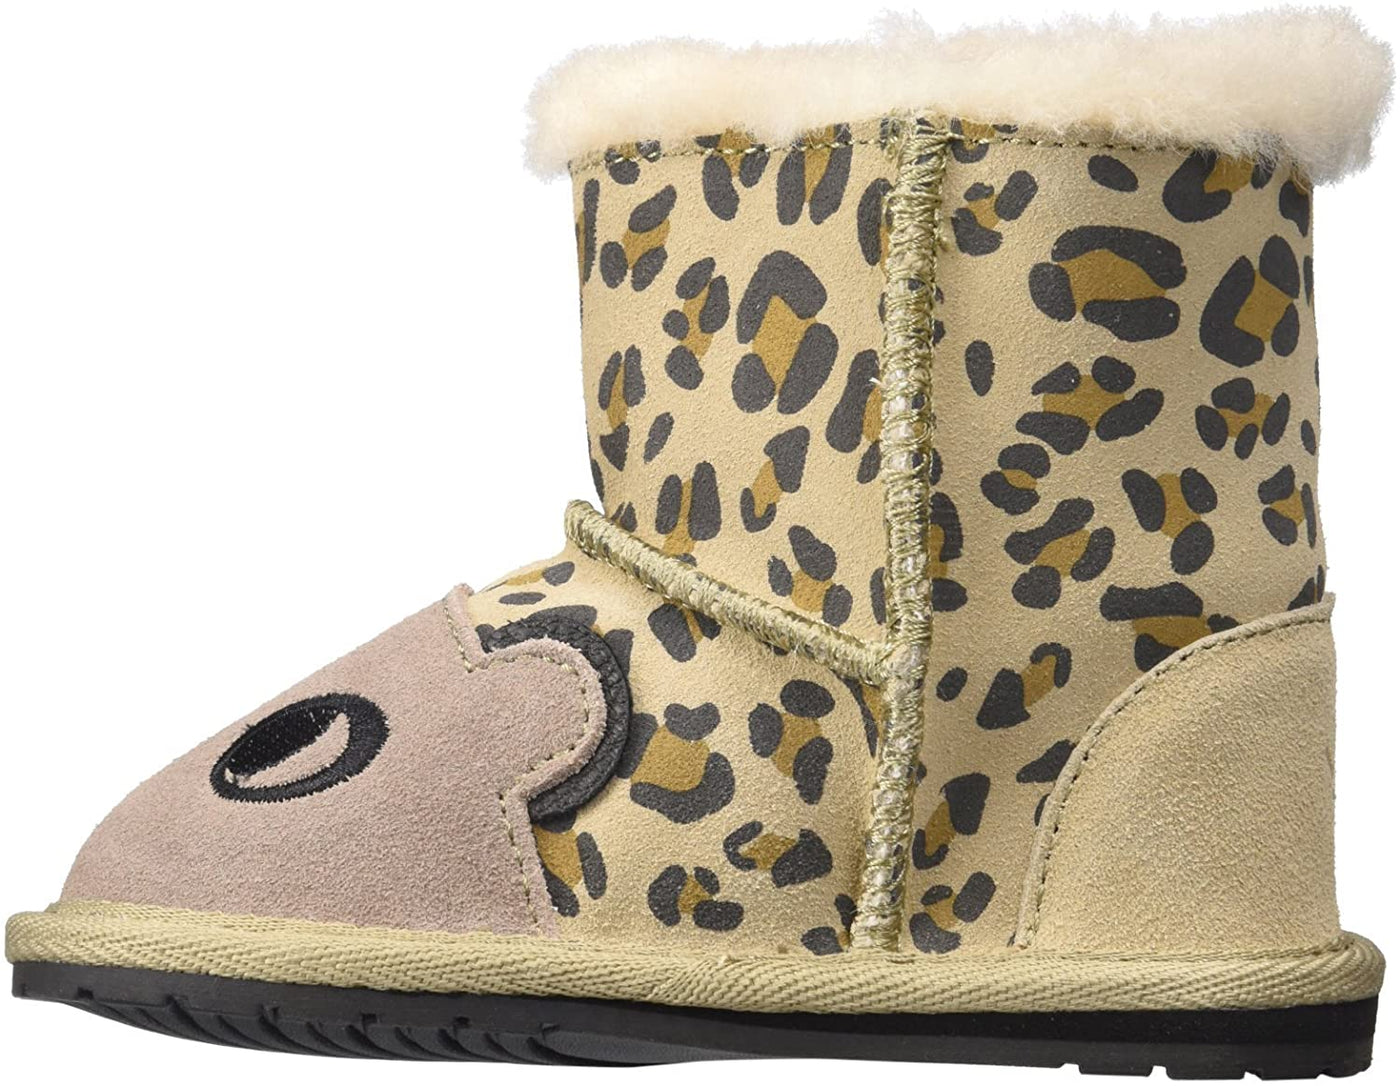 EMU AUSTRALIA Cheetah Kids Walker Baby Winter Boots